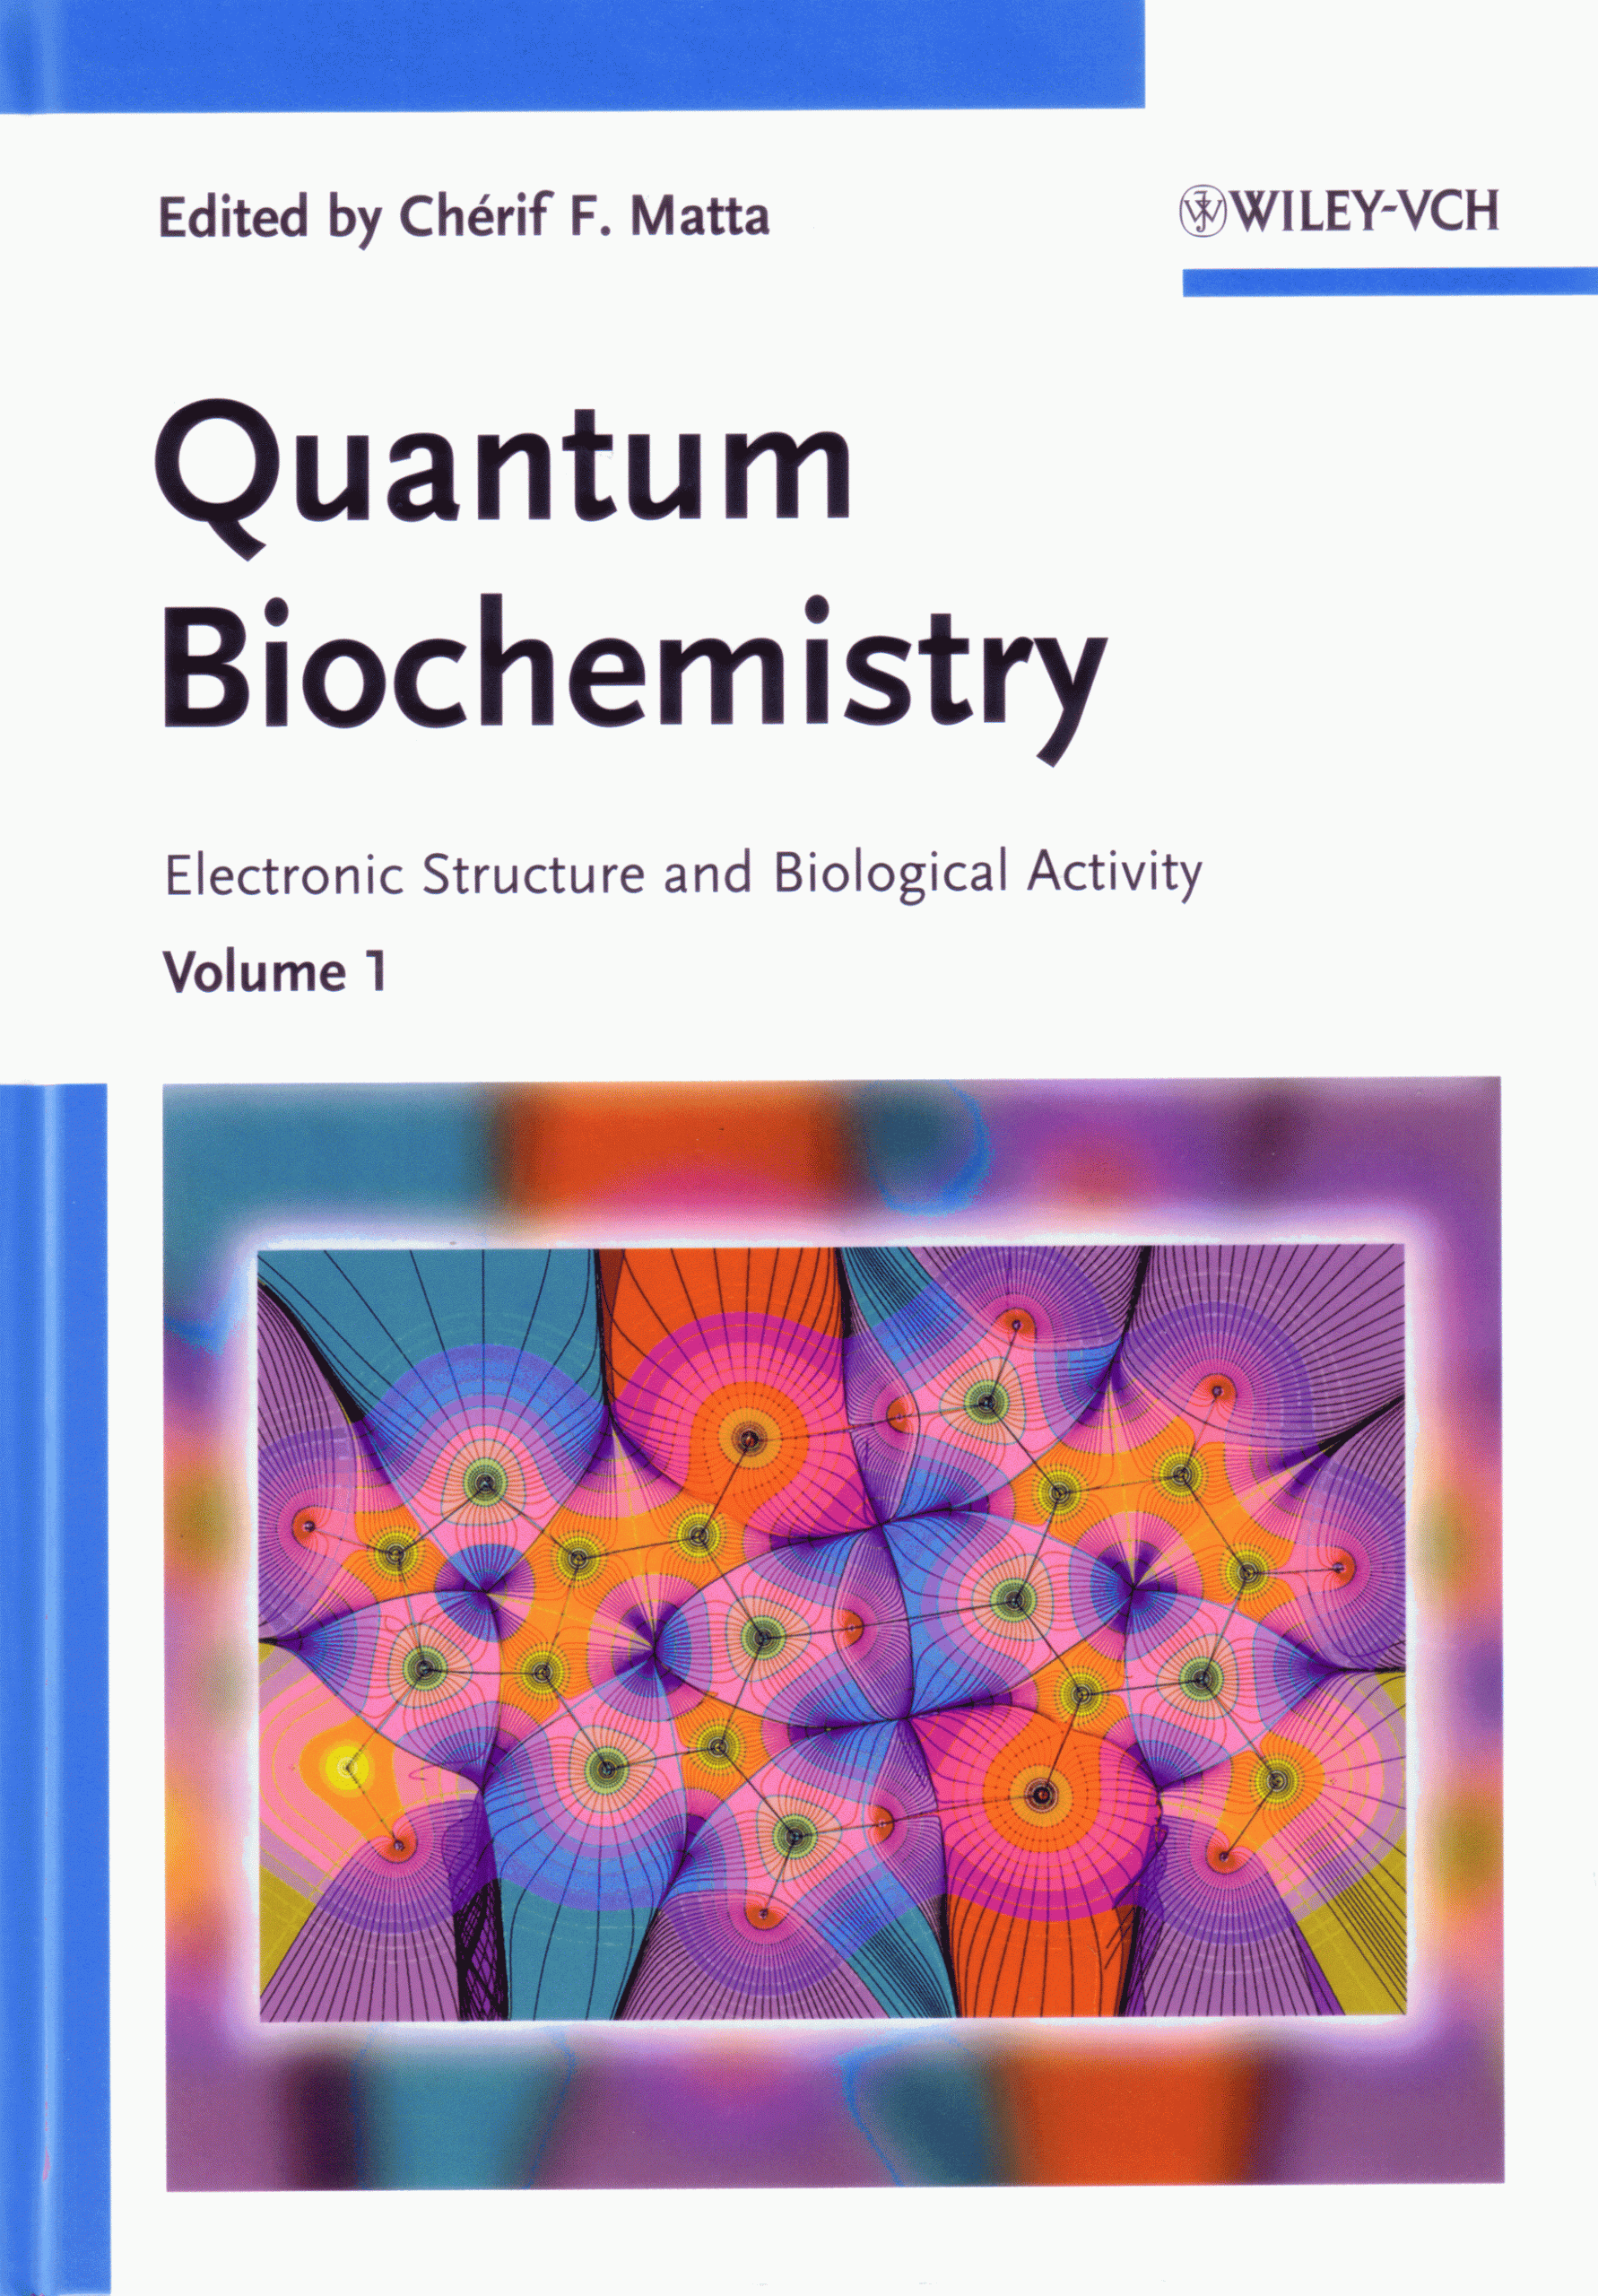 QuantumBiochemistry_cover_V